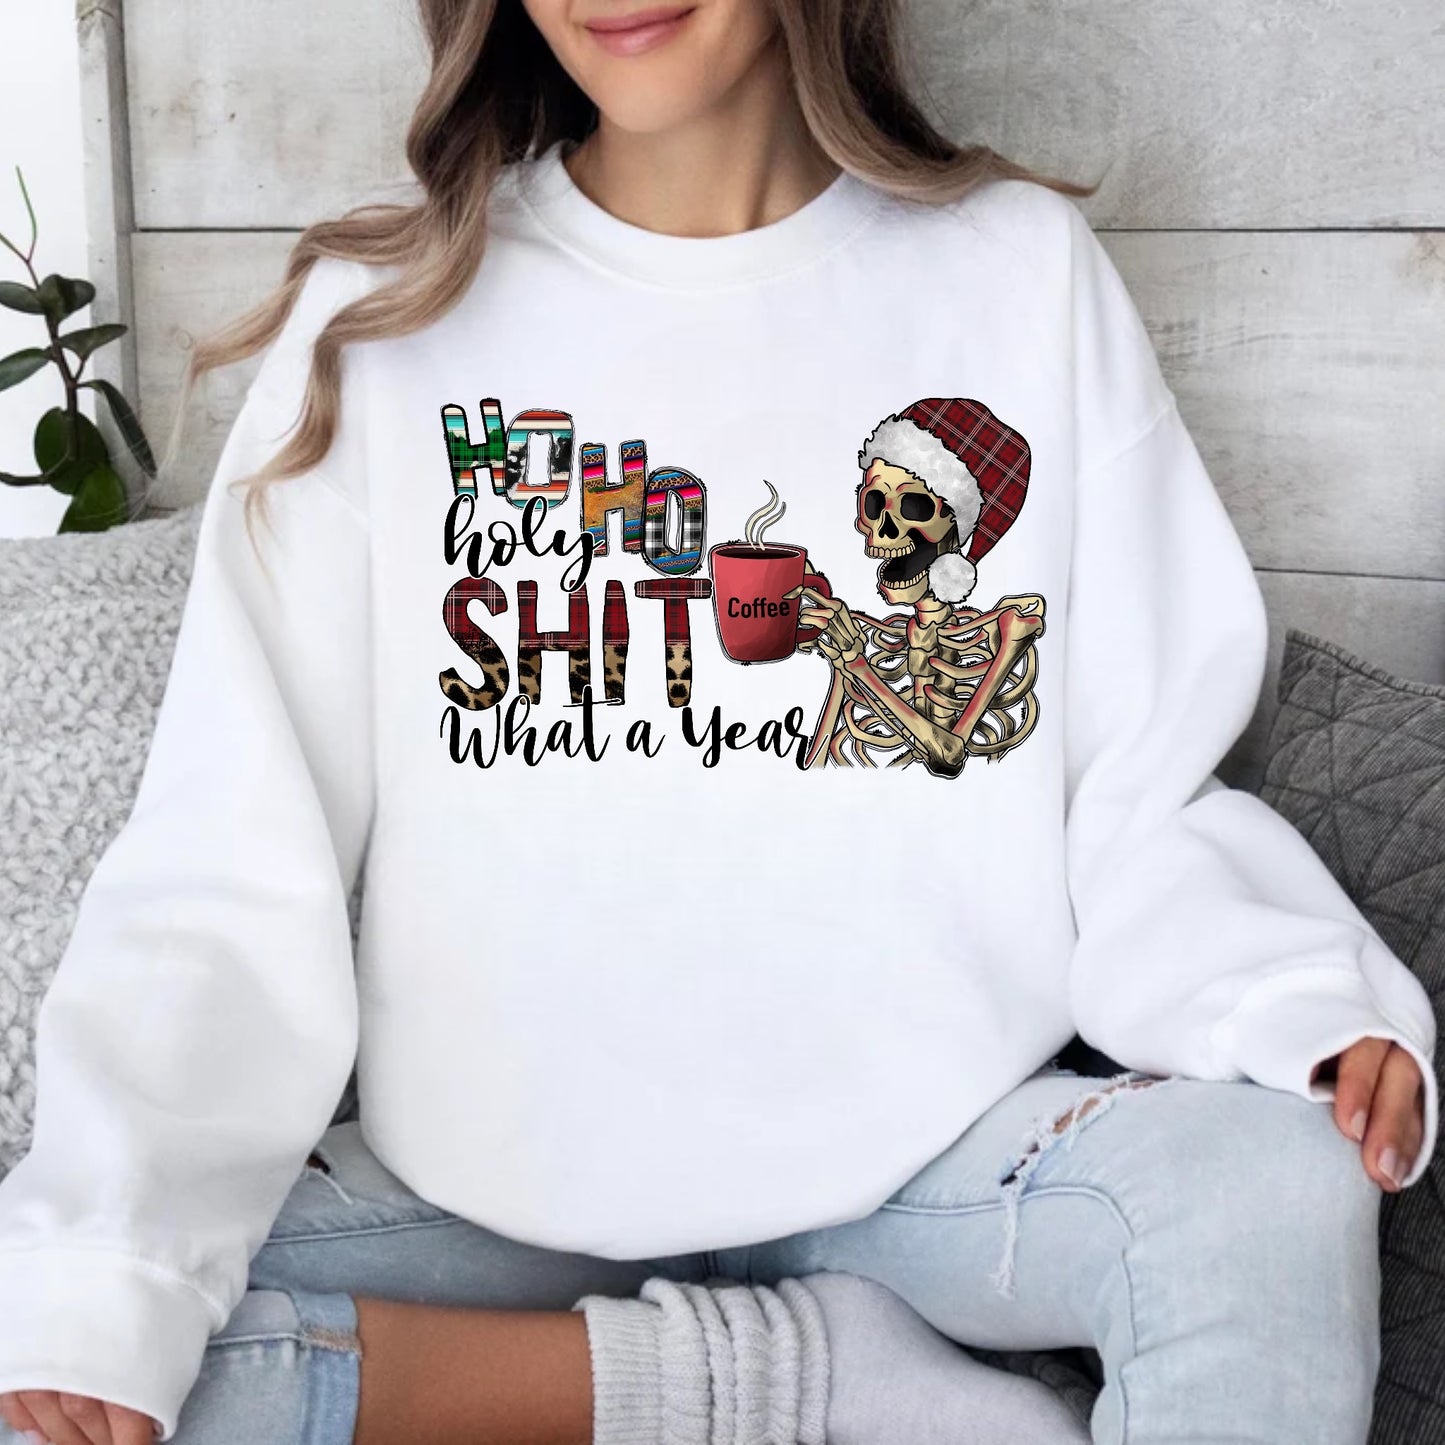 Ho-Ho-Holy S***-Tee or Crewneck Sweatshirt